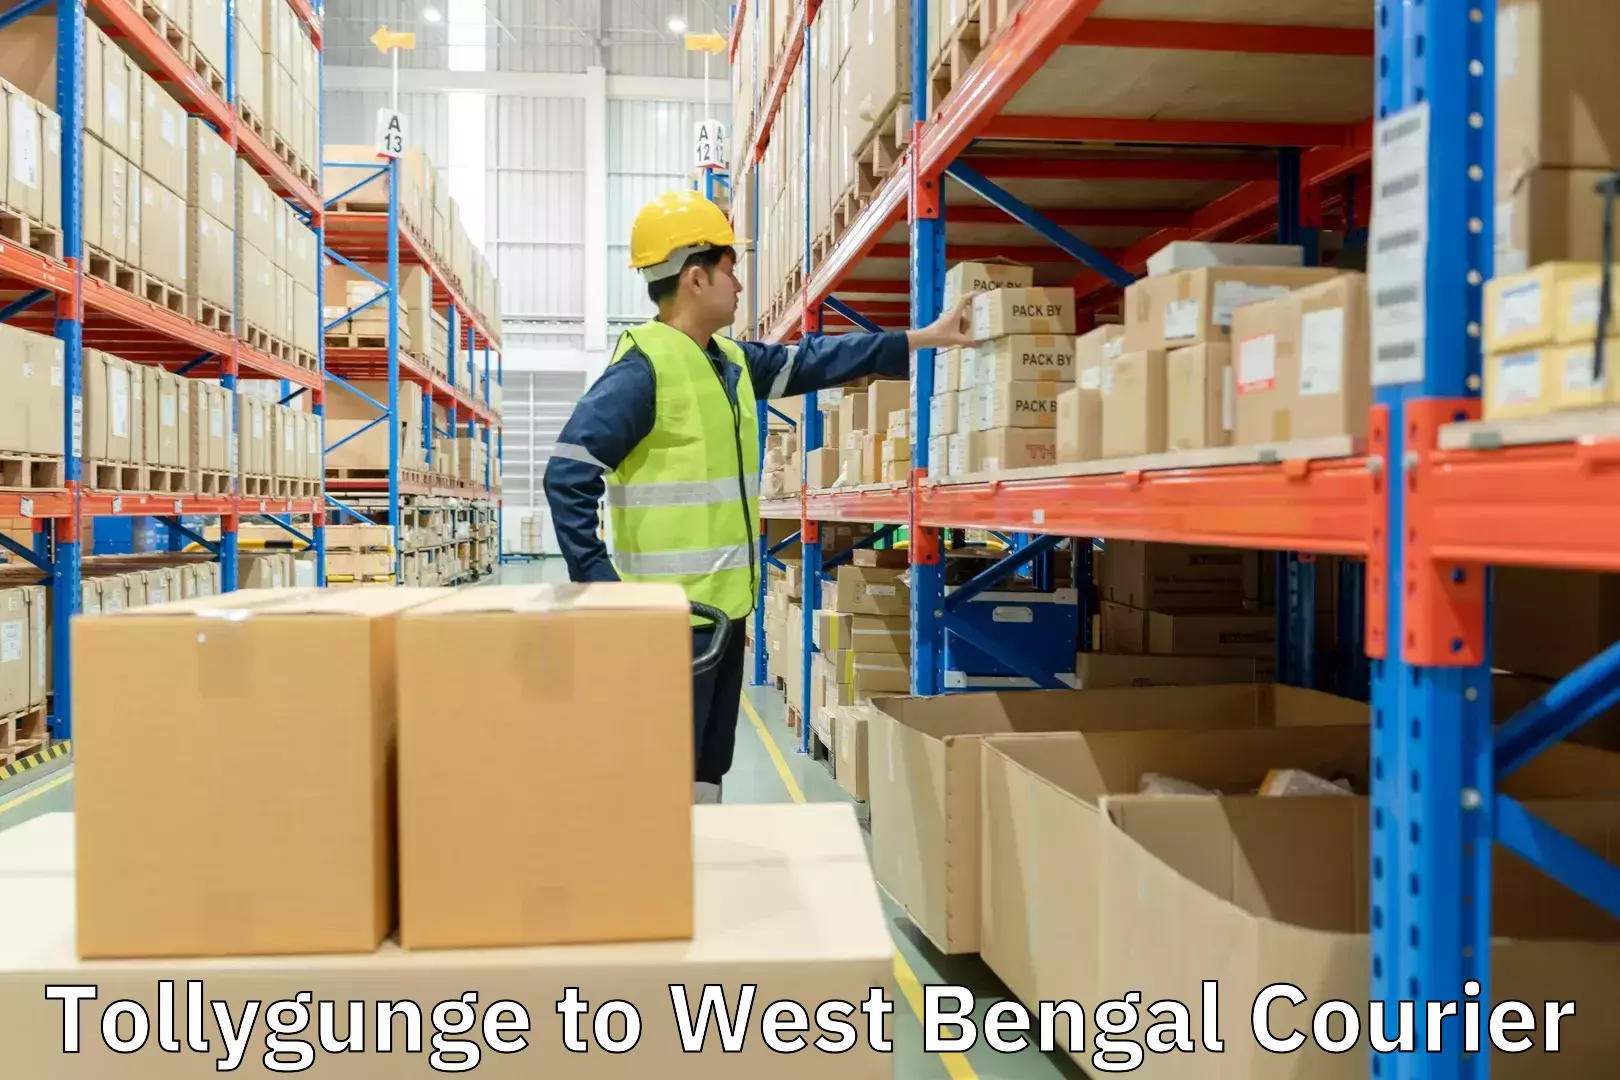 Digital courier platforms Tollygunge to West Bengal